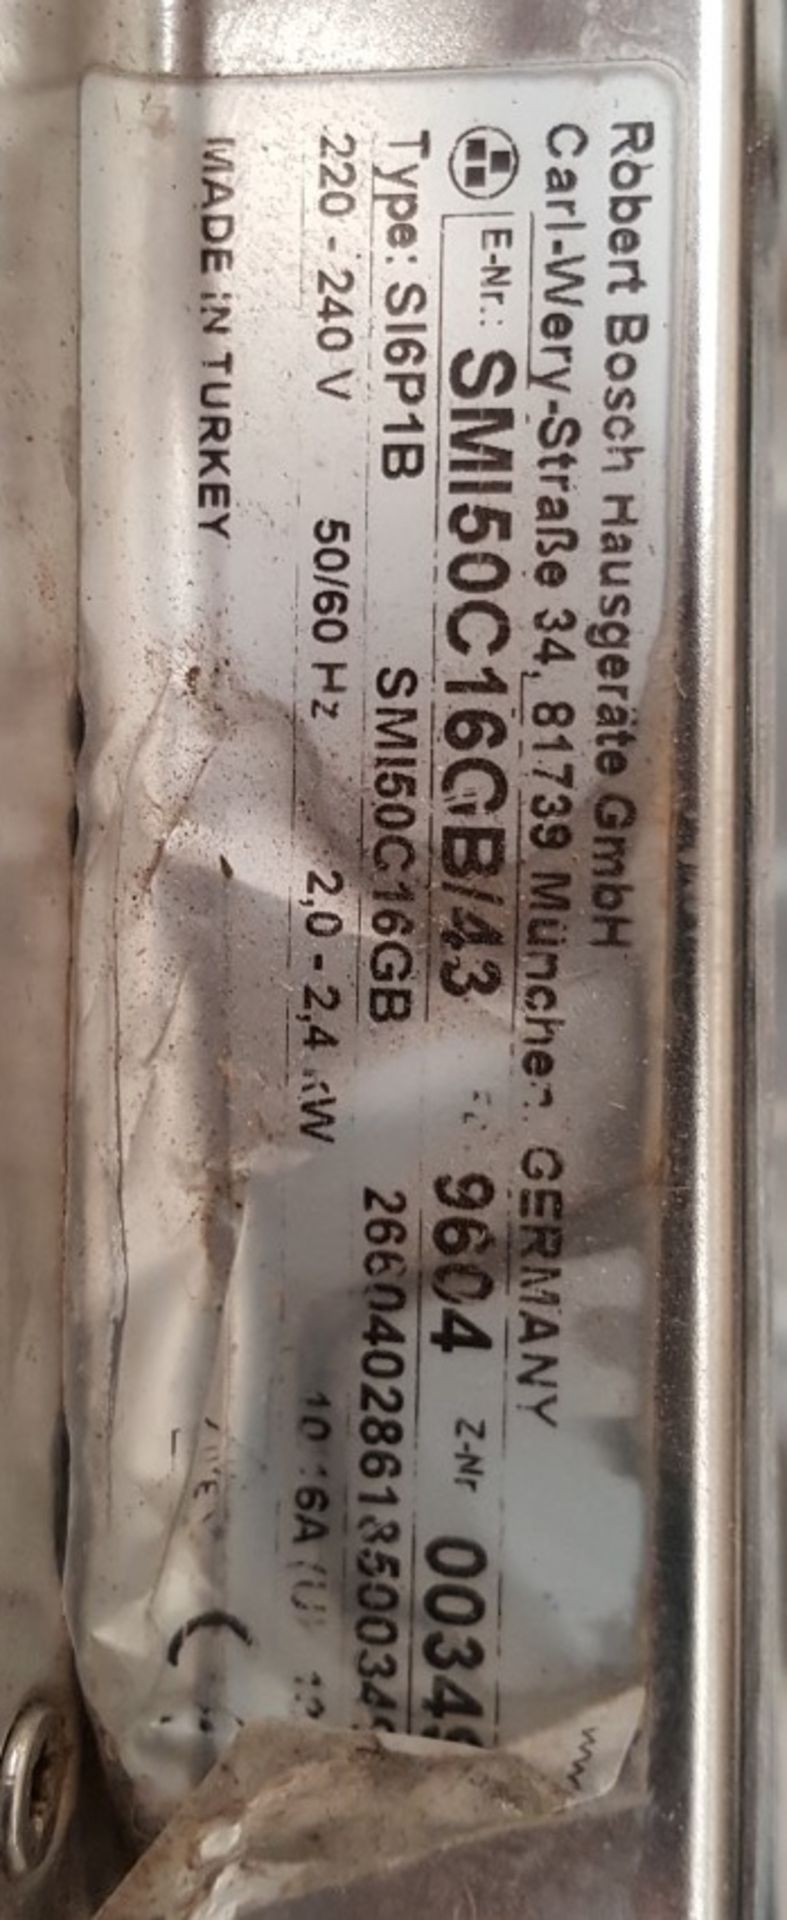 1 x Bosch SMI50C16GB Semi-Integrated Dishwasher, Black - Ref CBU35 - CL440 - NO VAT ON HAMMER  - - Image 5 of 8